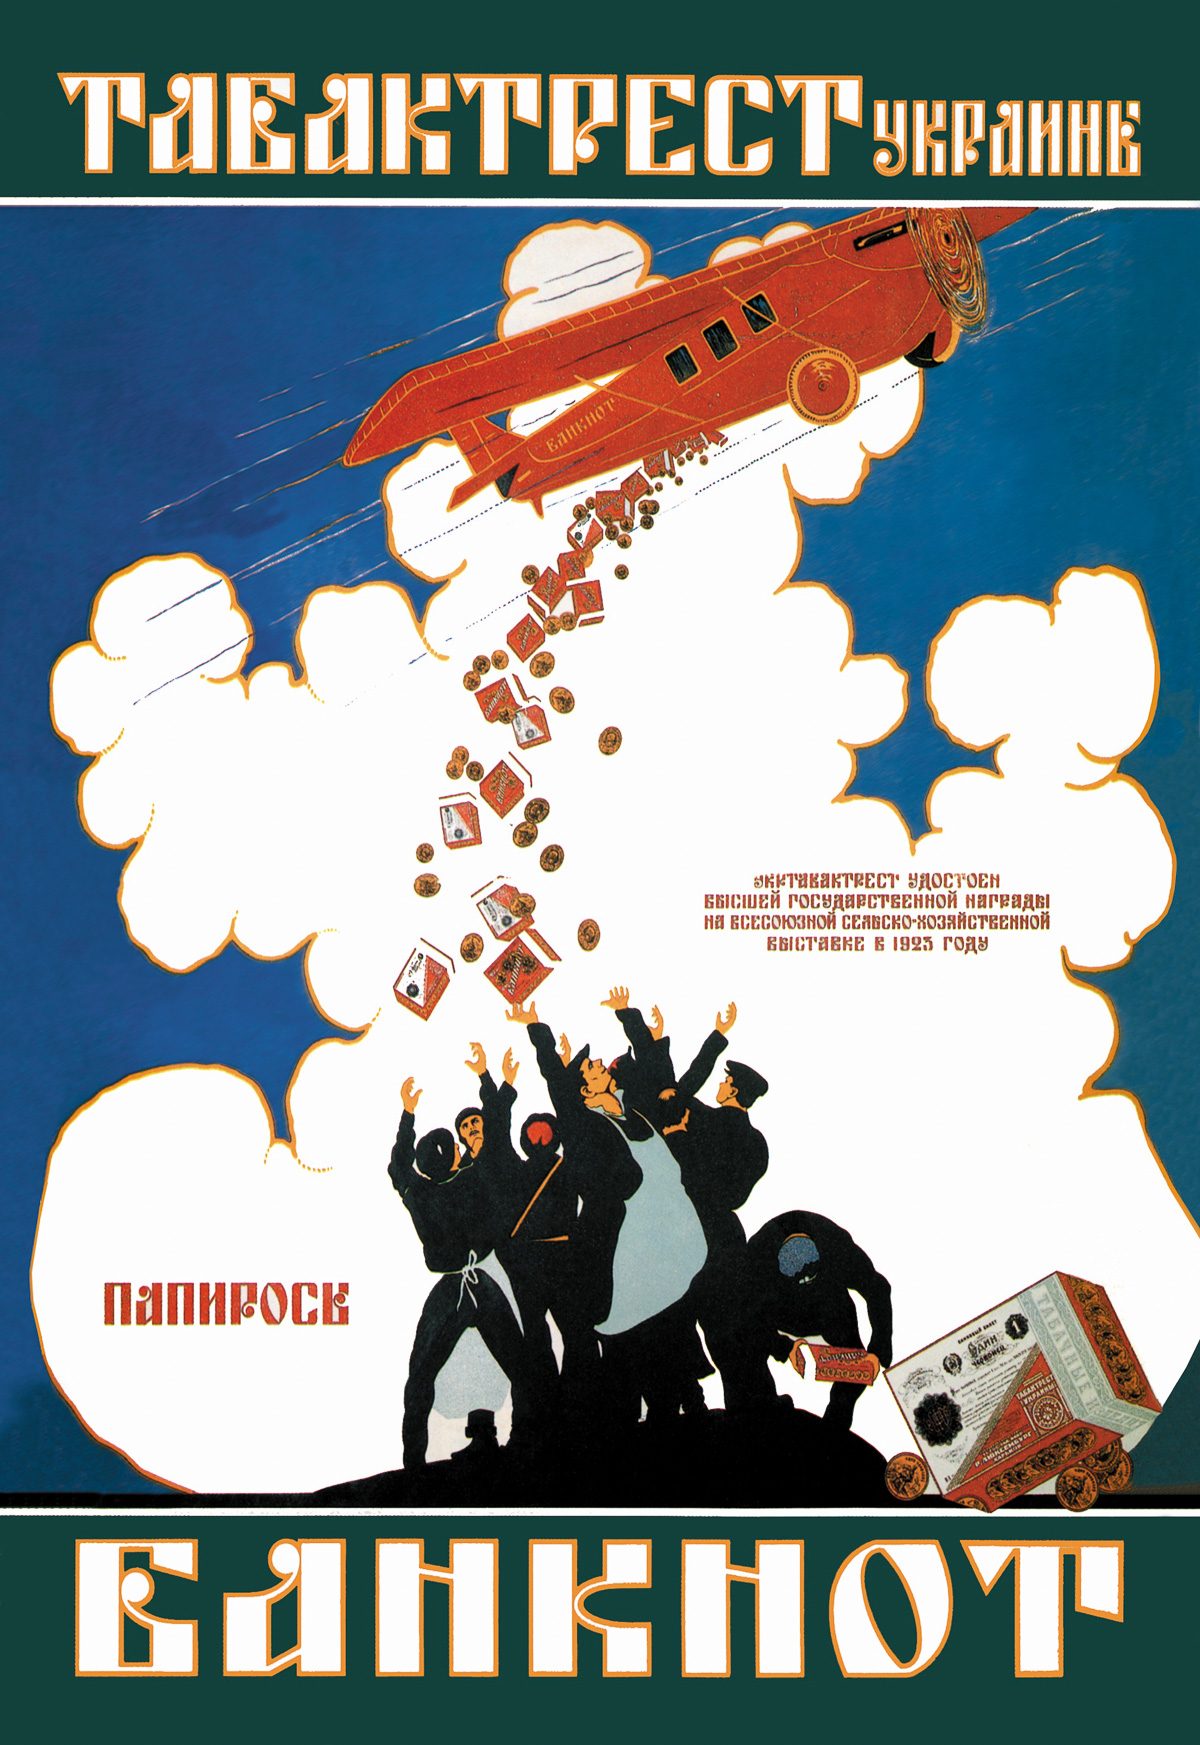 Sovetskaya reklama sigaret 12